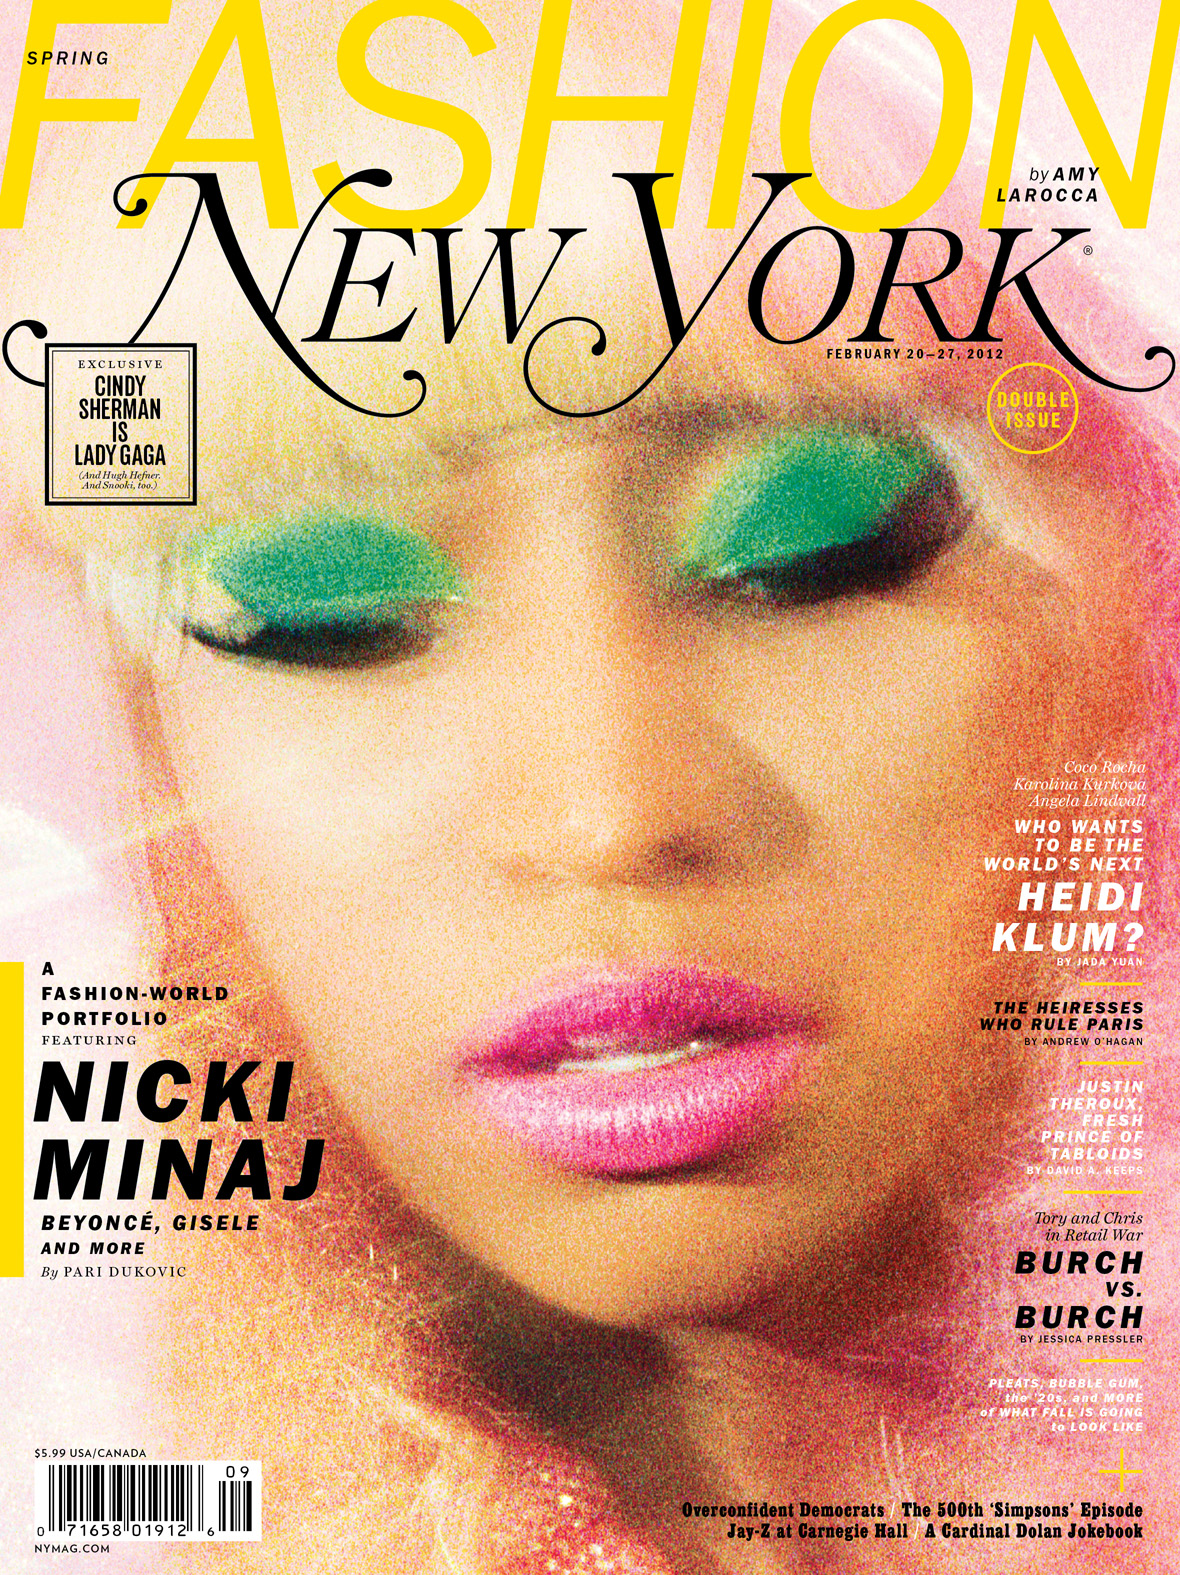 New York-February 20-27, 2012: "Nicki Minaj"